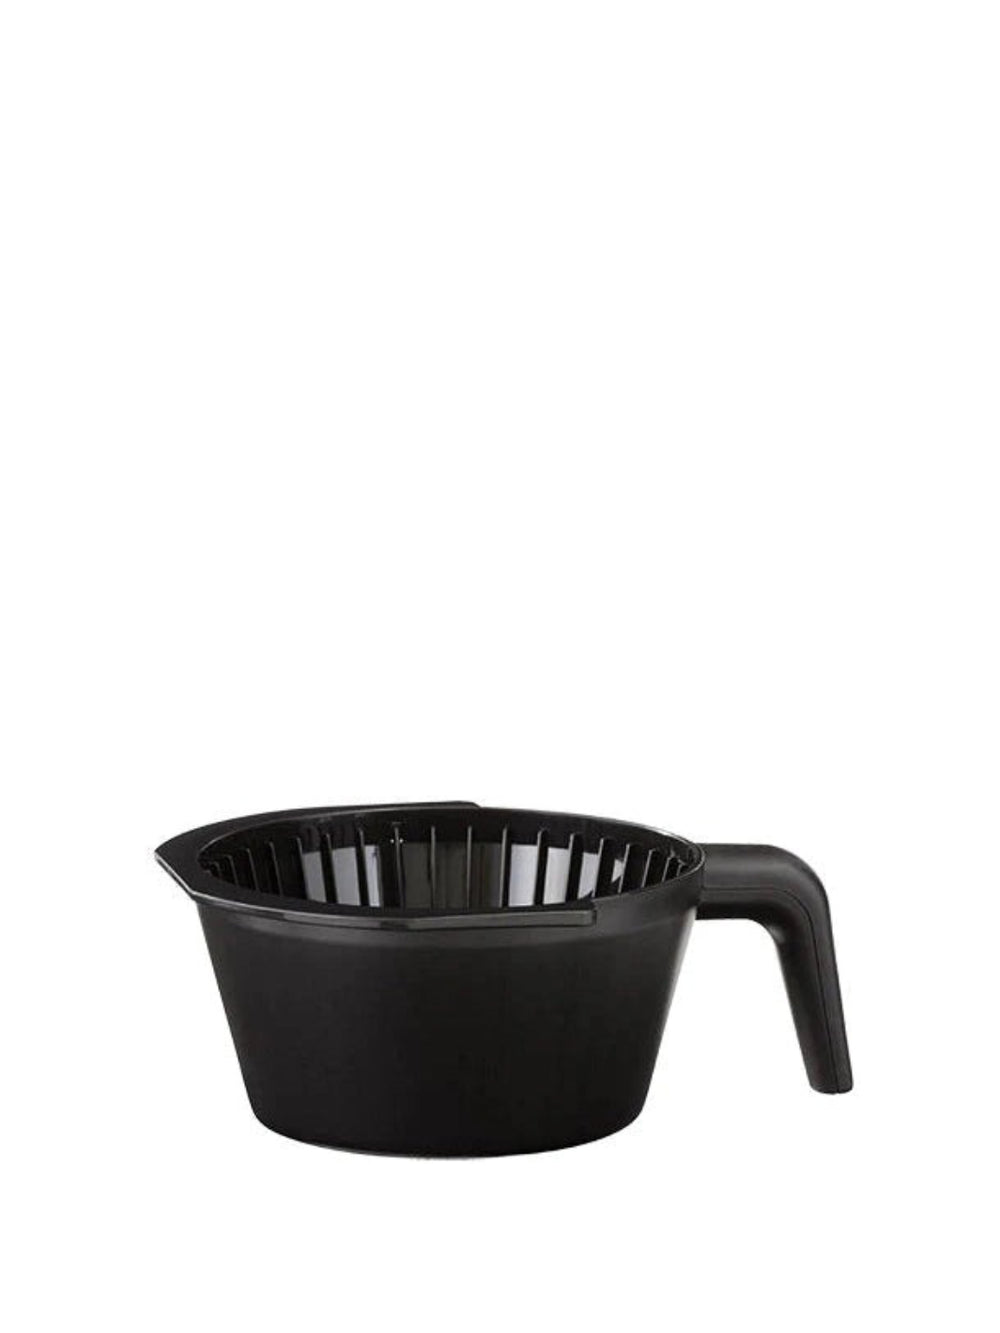 BONAVITA Replacement Filter Basket (8-Cup) (for BV1901PW)